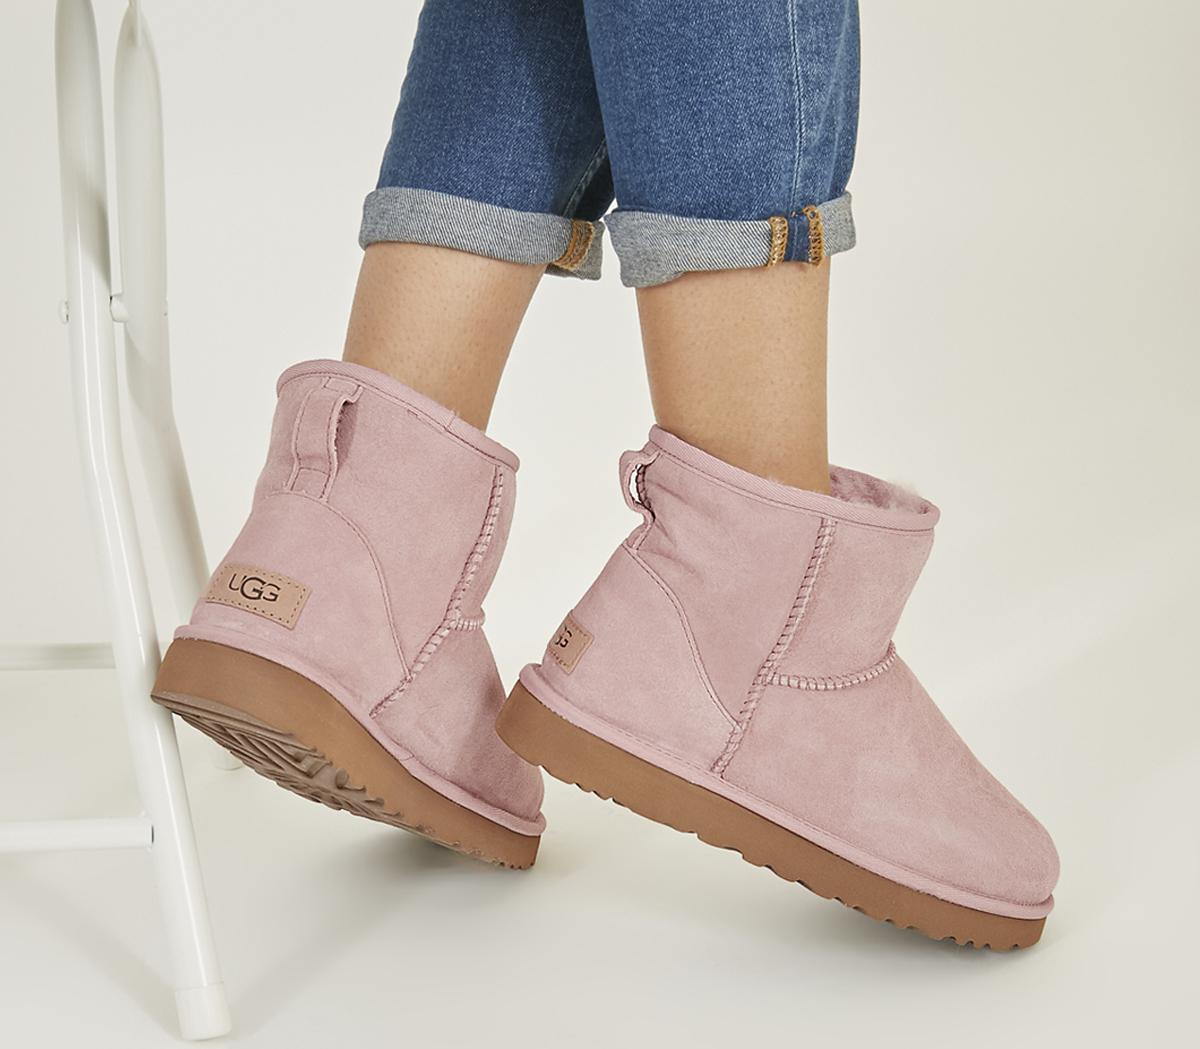 pink ugg boots sale uk